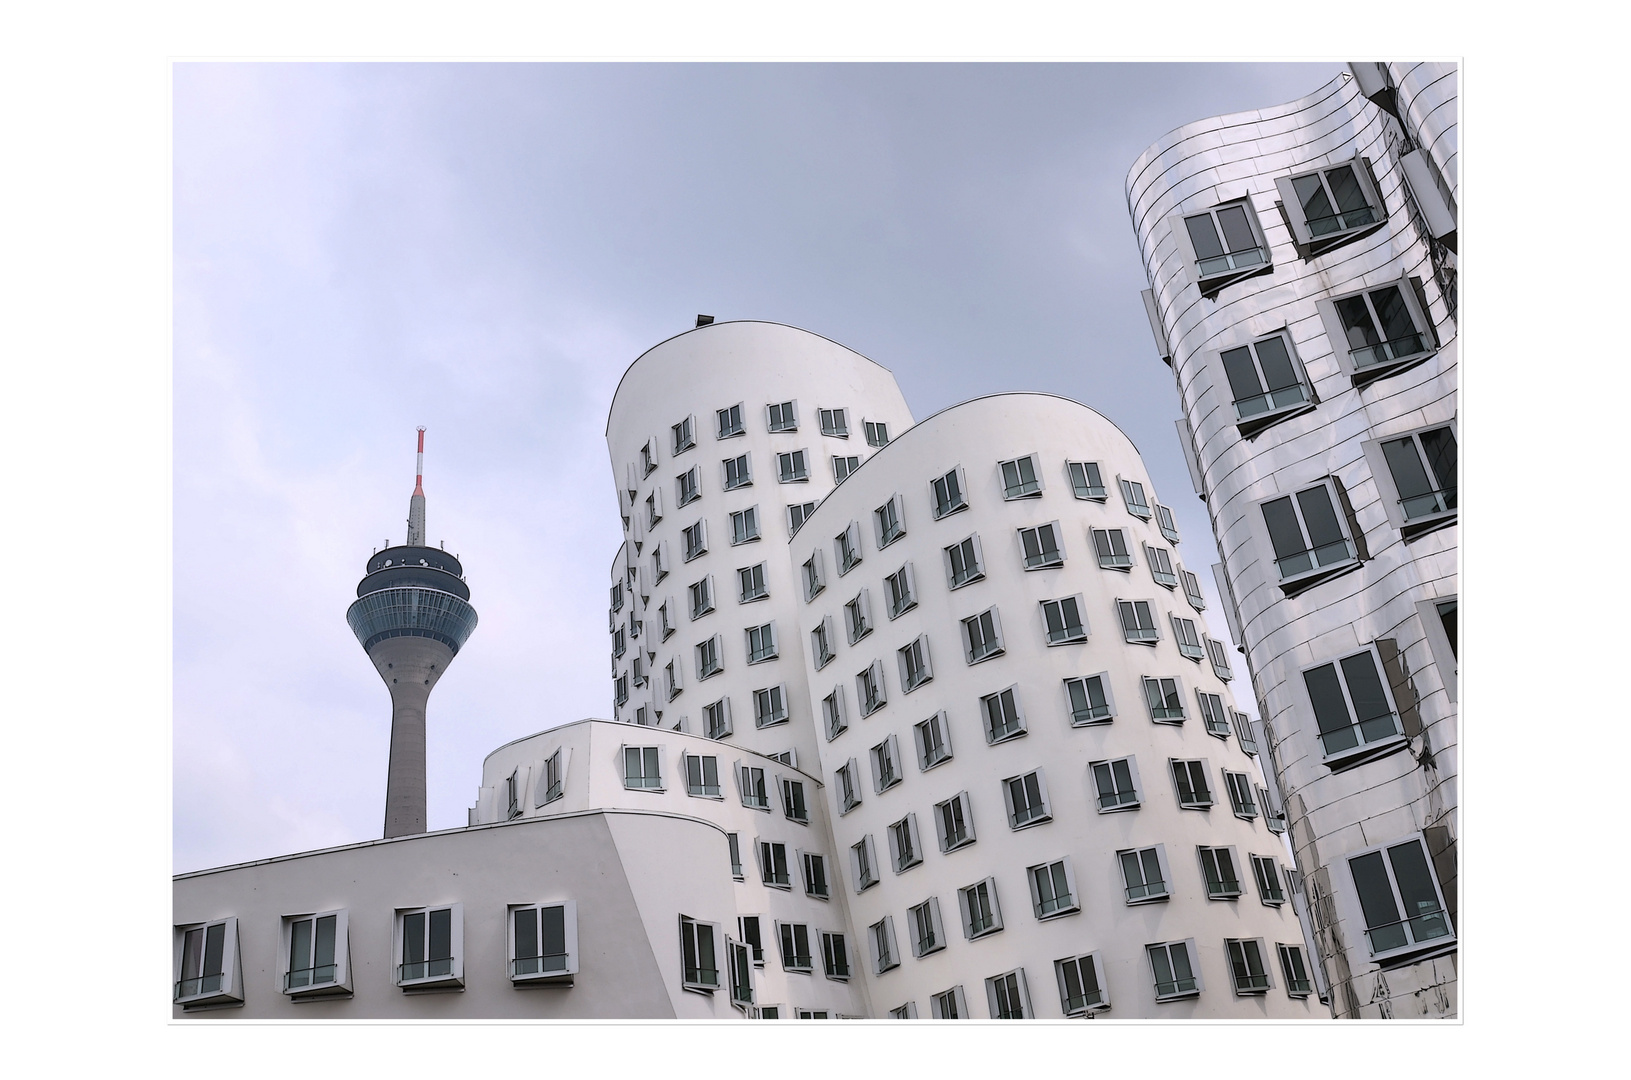 Gehryhäuser Düsseldorf